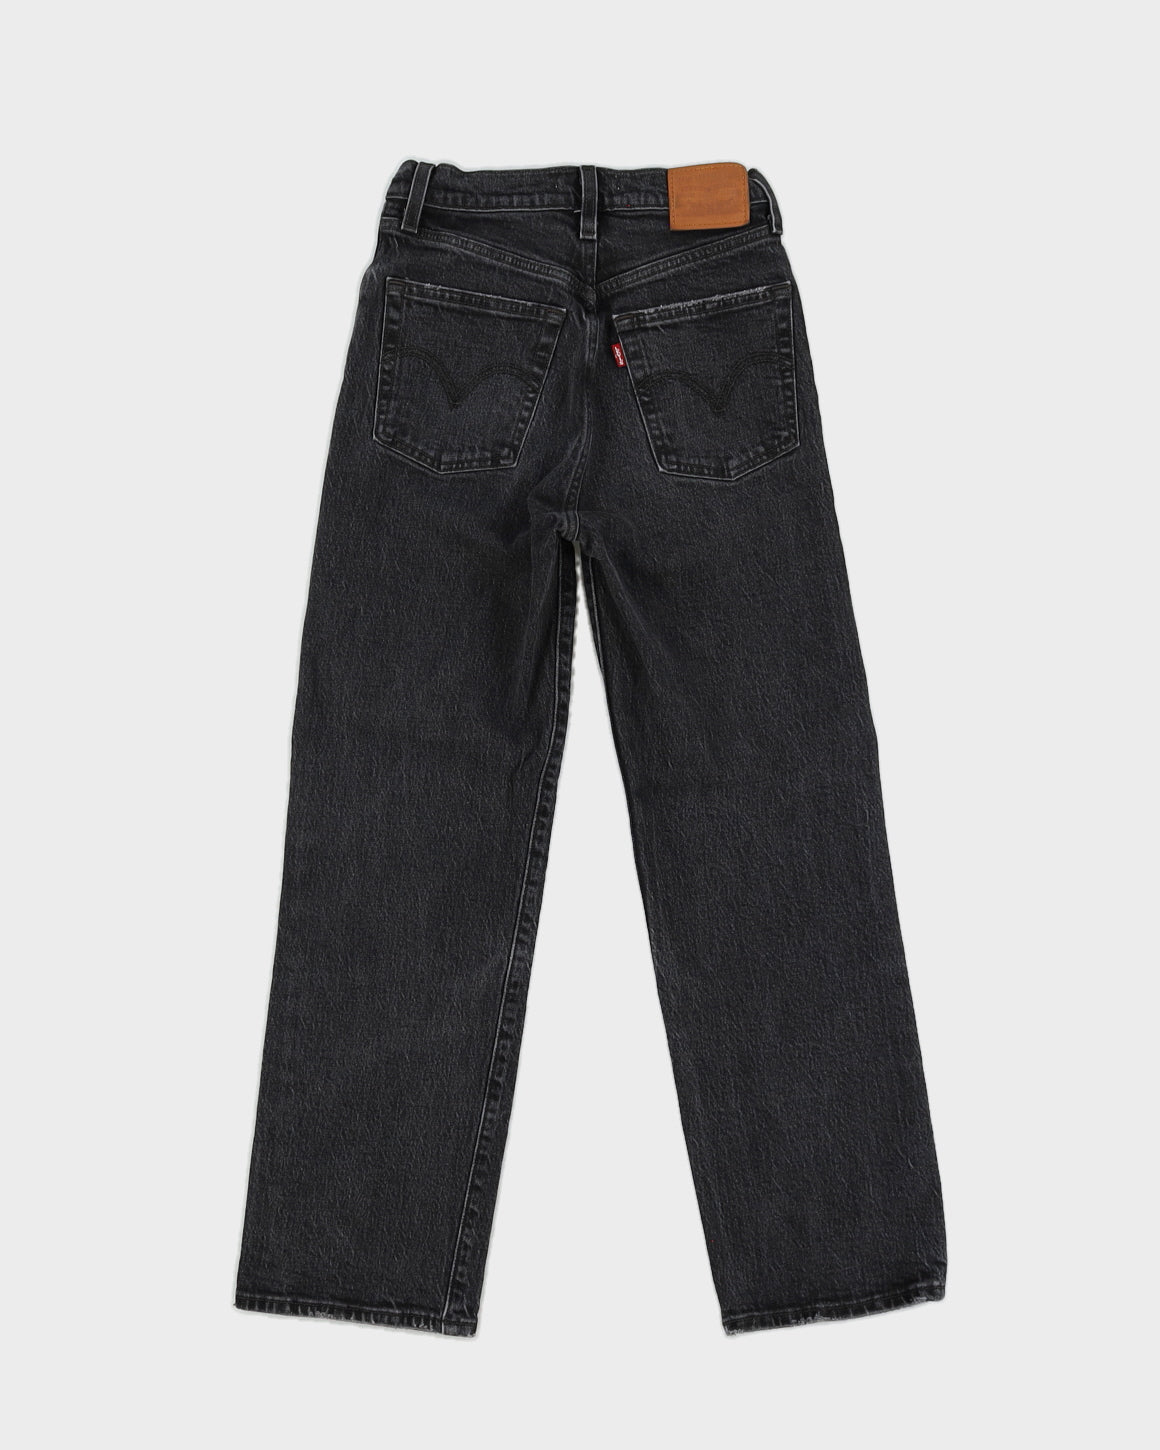 Levi's Big E Repro Black Jeans - W26 L27